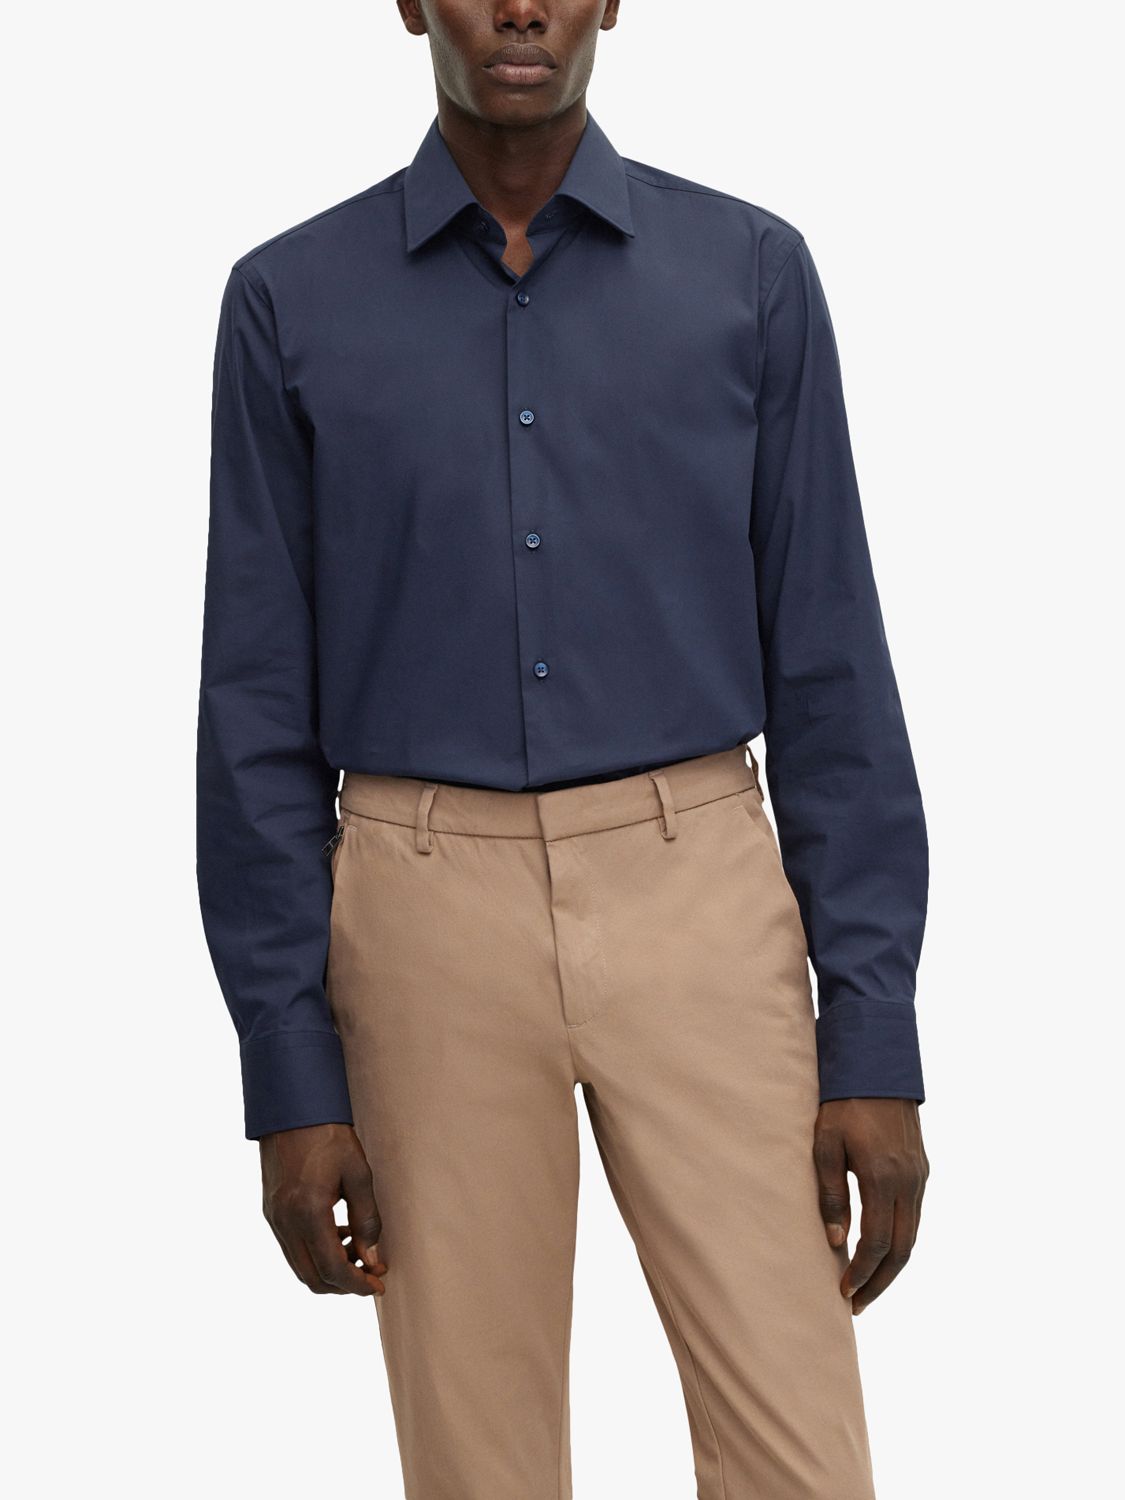 HUGO BOSS Joe Kent Regular Fit Shirt, Dark Blue, 15.75